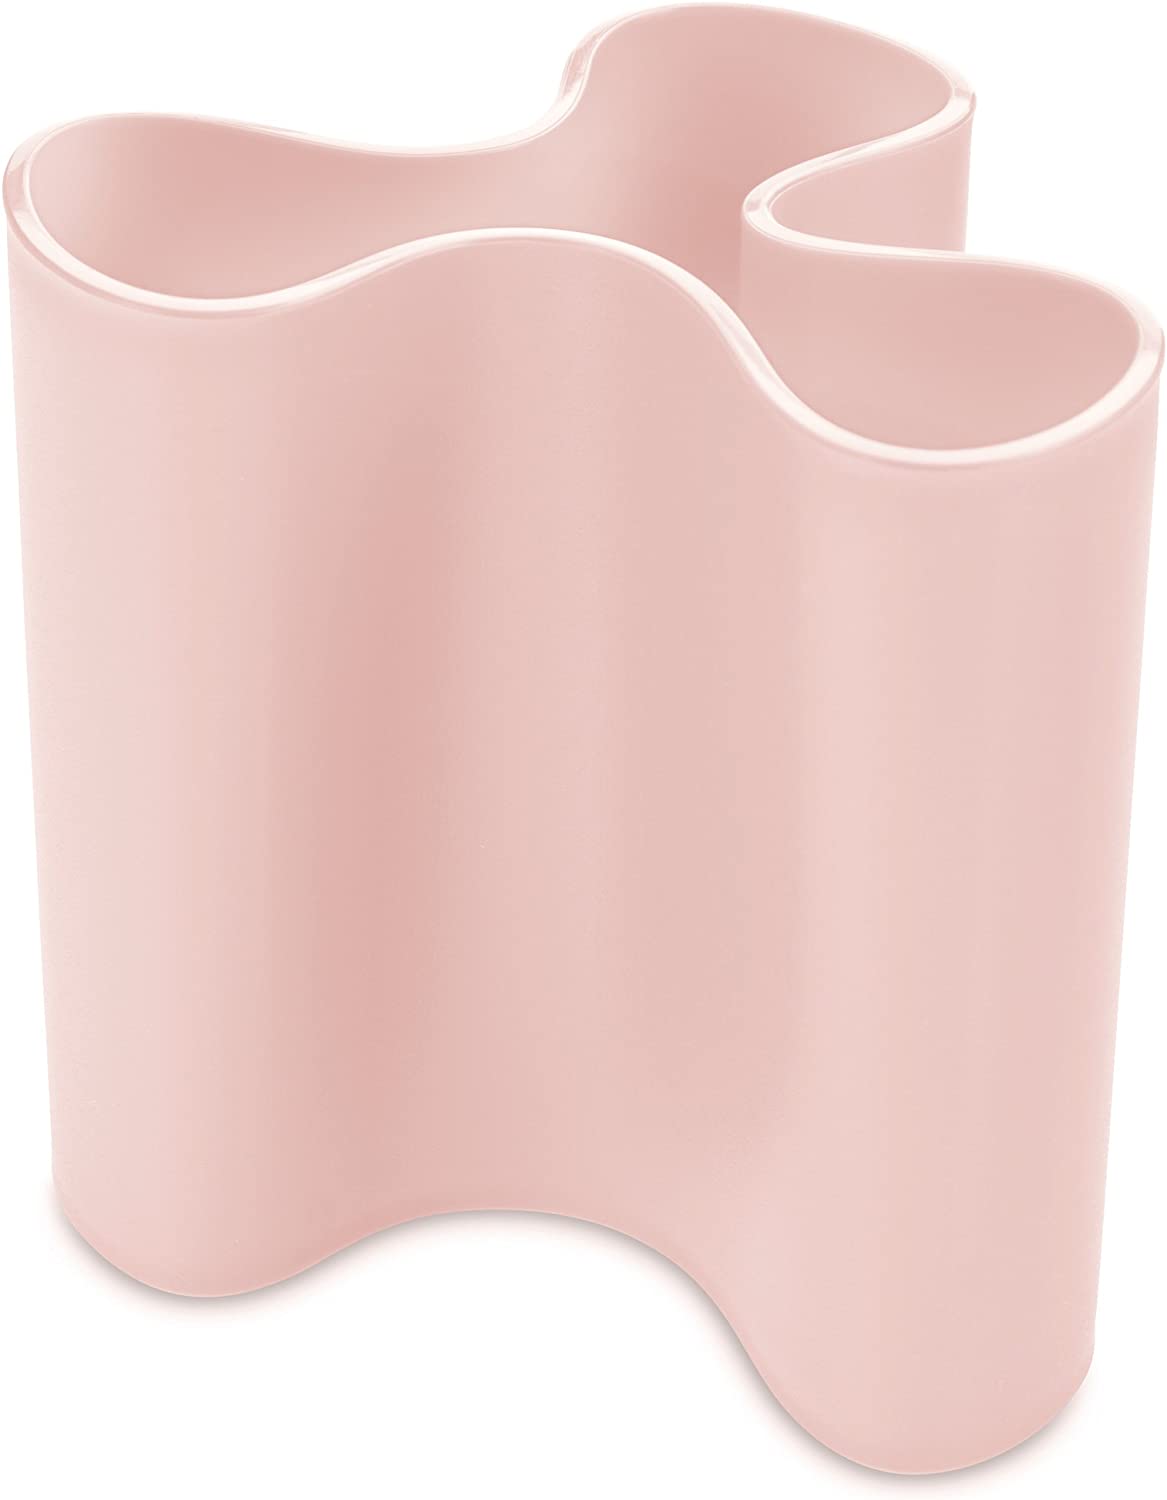 Koziol Clara M Vase 10.3 x 11.4 x 10.9 cm Plastic White, Powder Pink, medium